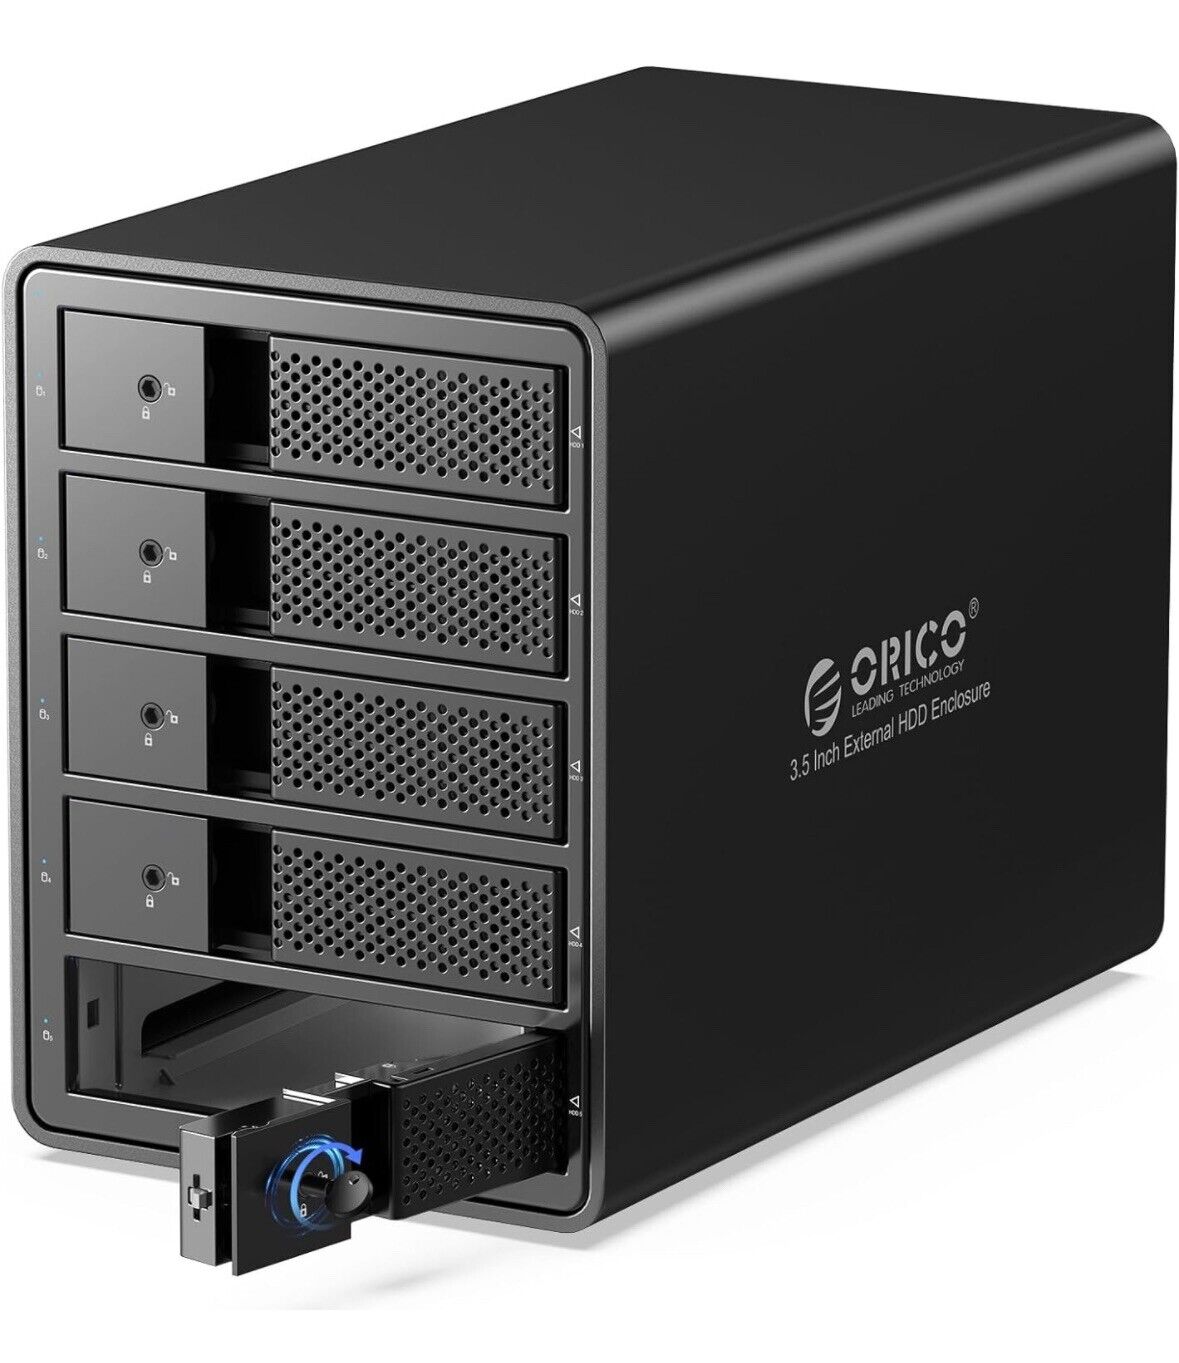 ORICO 5 Bay RAID USB 3.0 External Hard Drive Enclosure Model-9558U3 (Open Box)